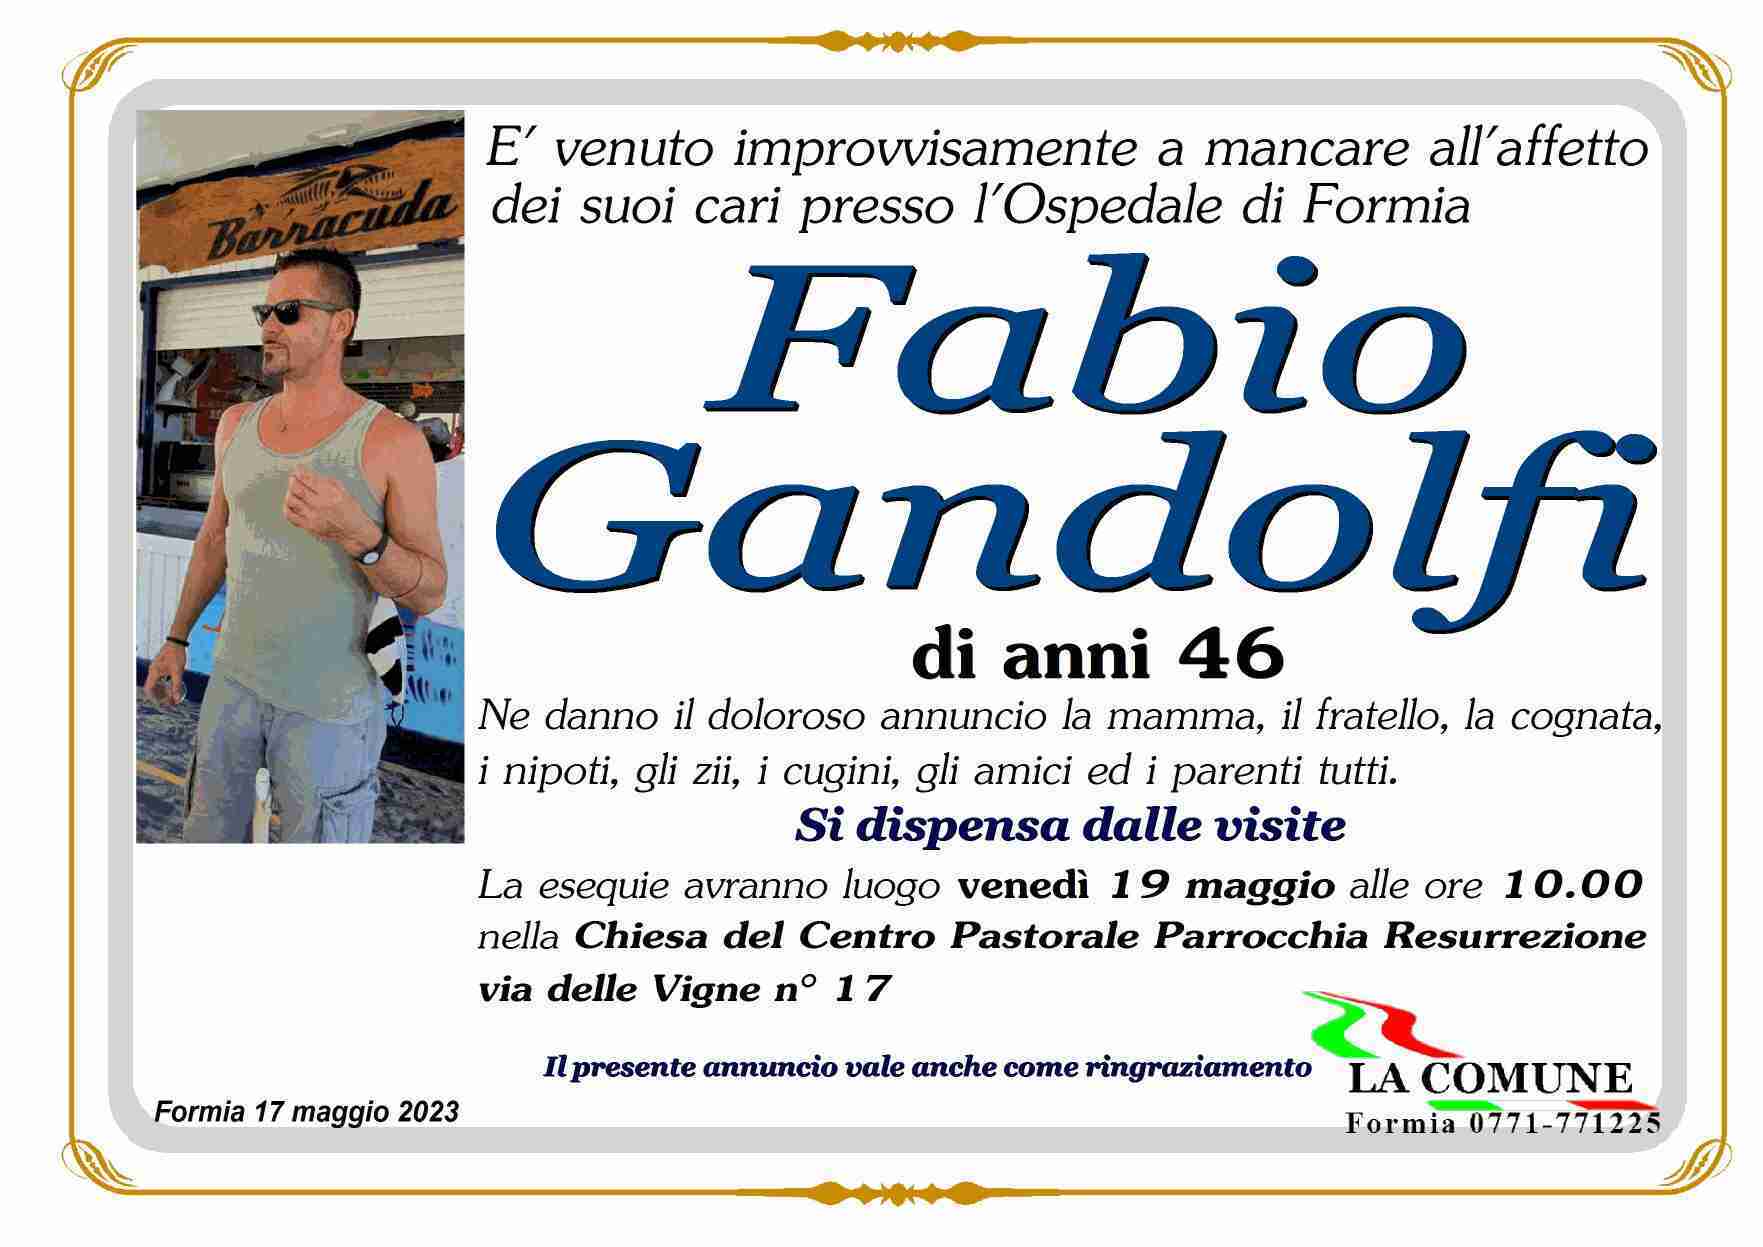 Fabio Gandolfi